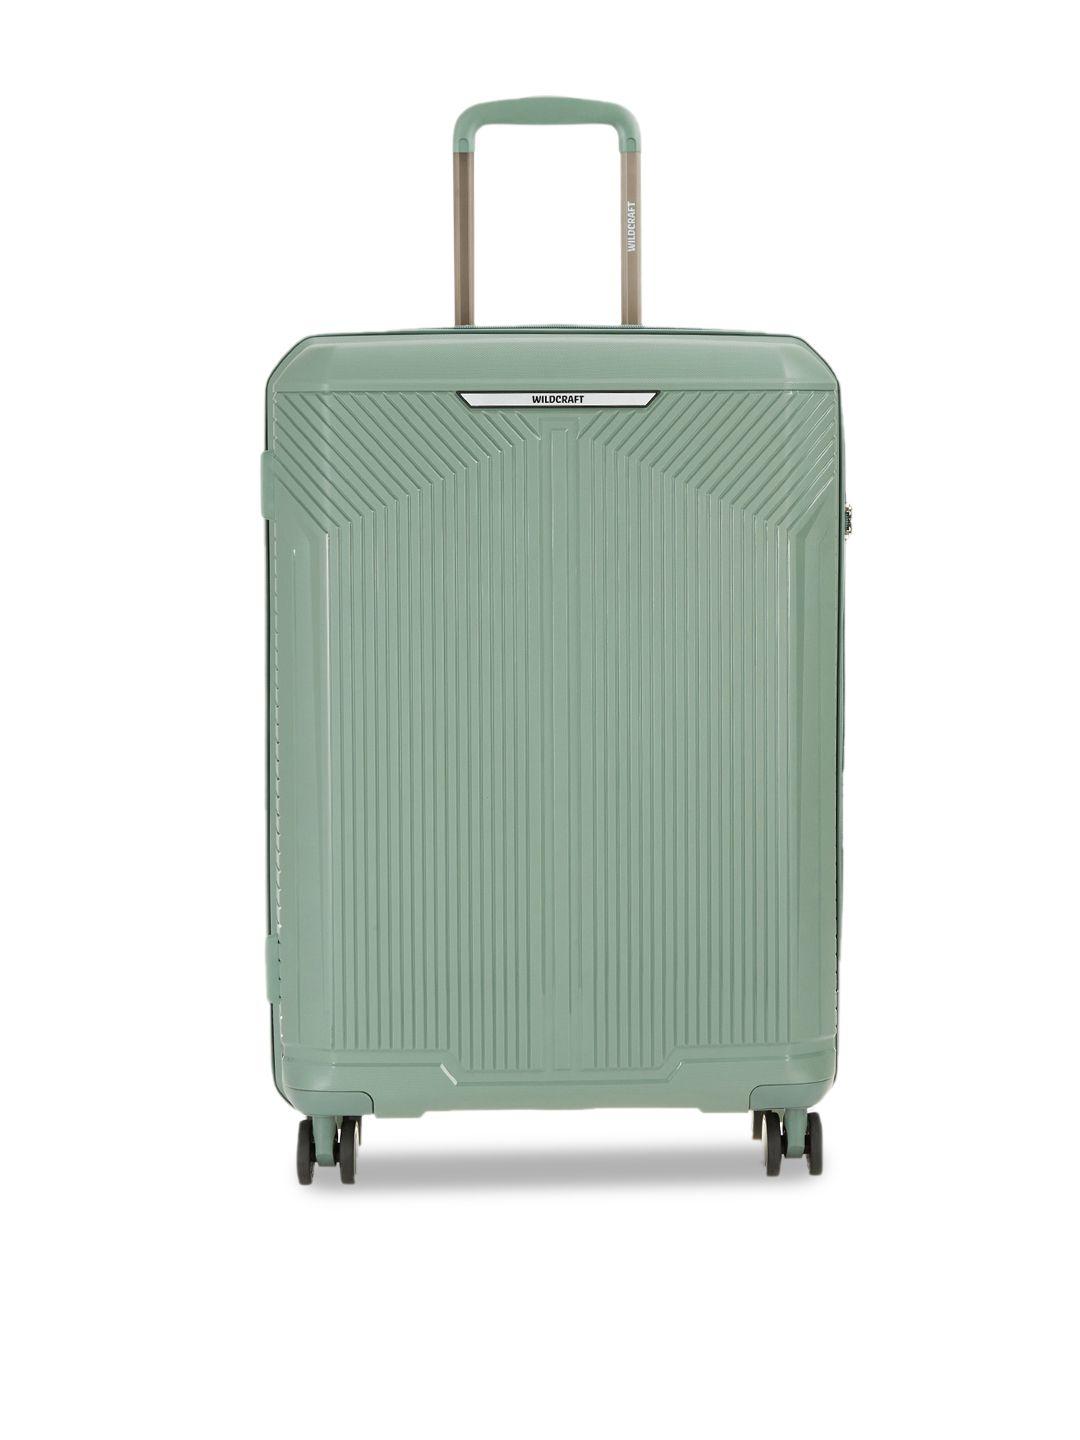 wildcraft hard-sided medium trolley suitcase